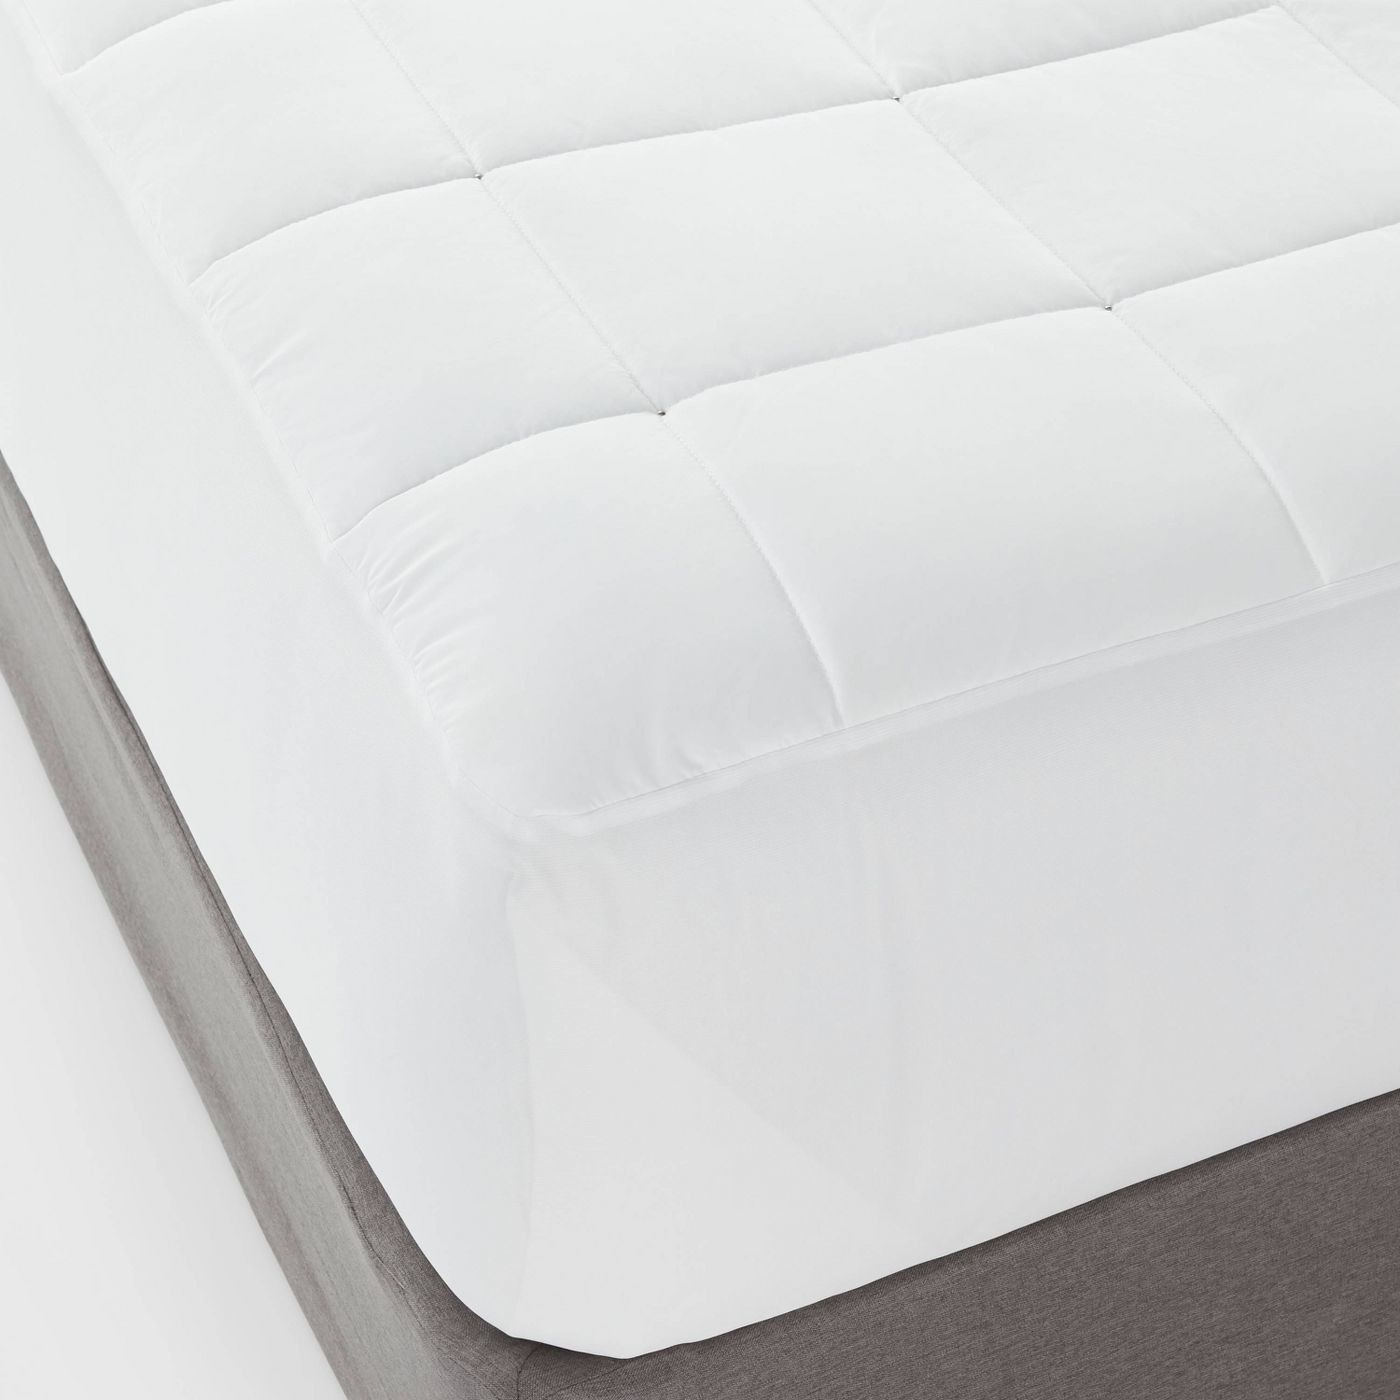 The microplush comfort mattress pad